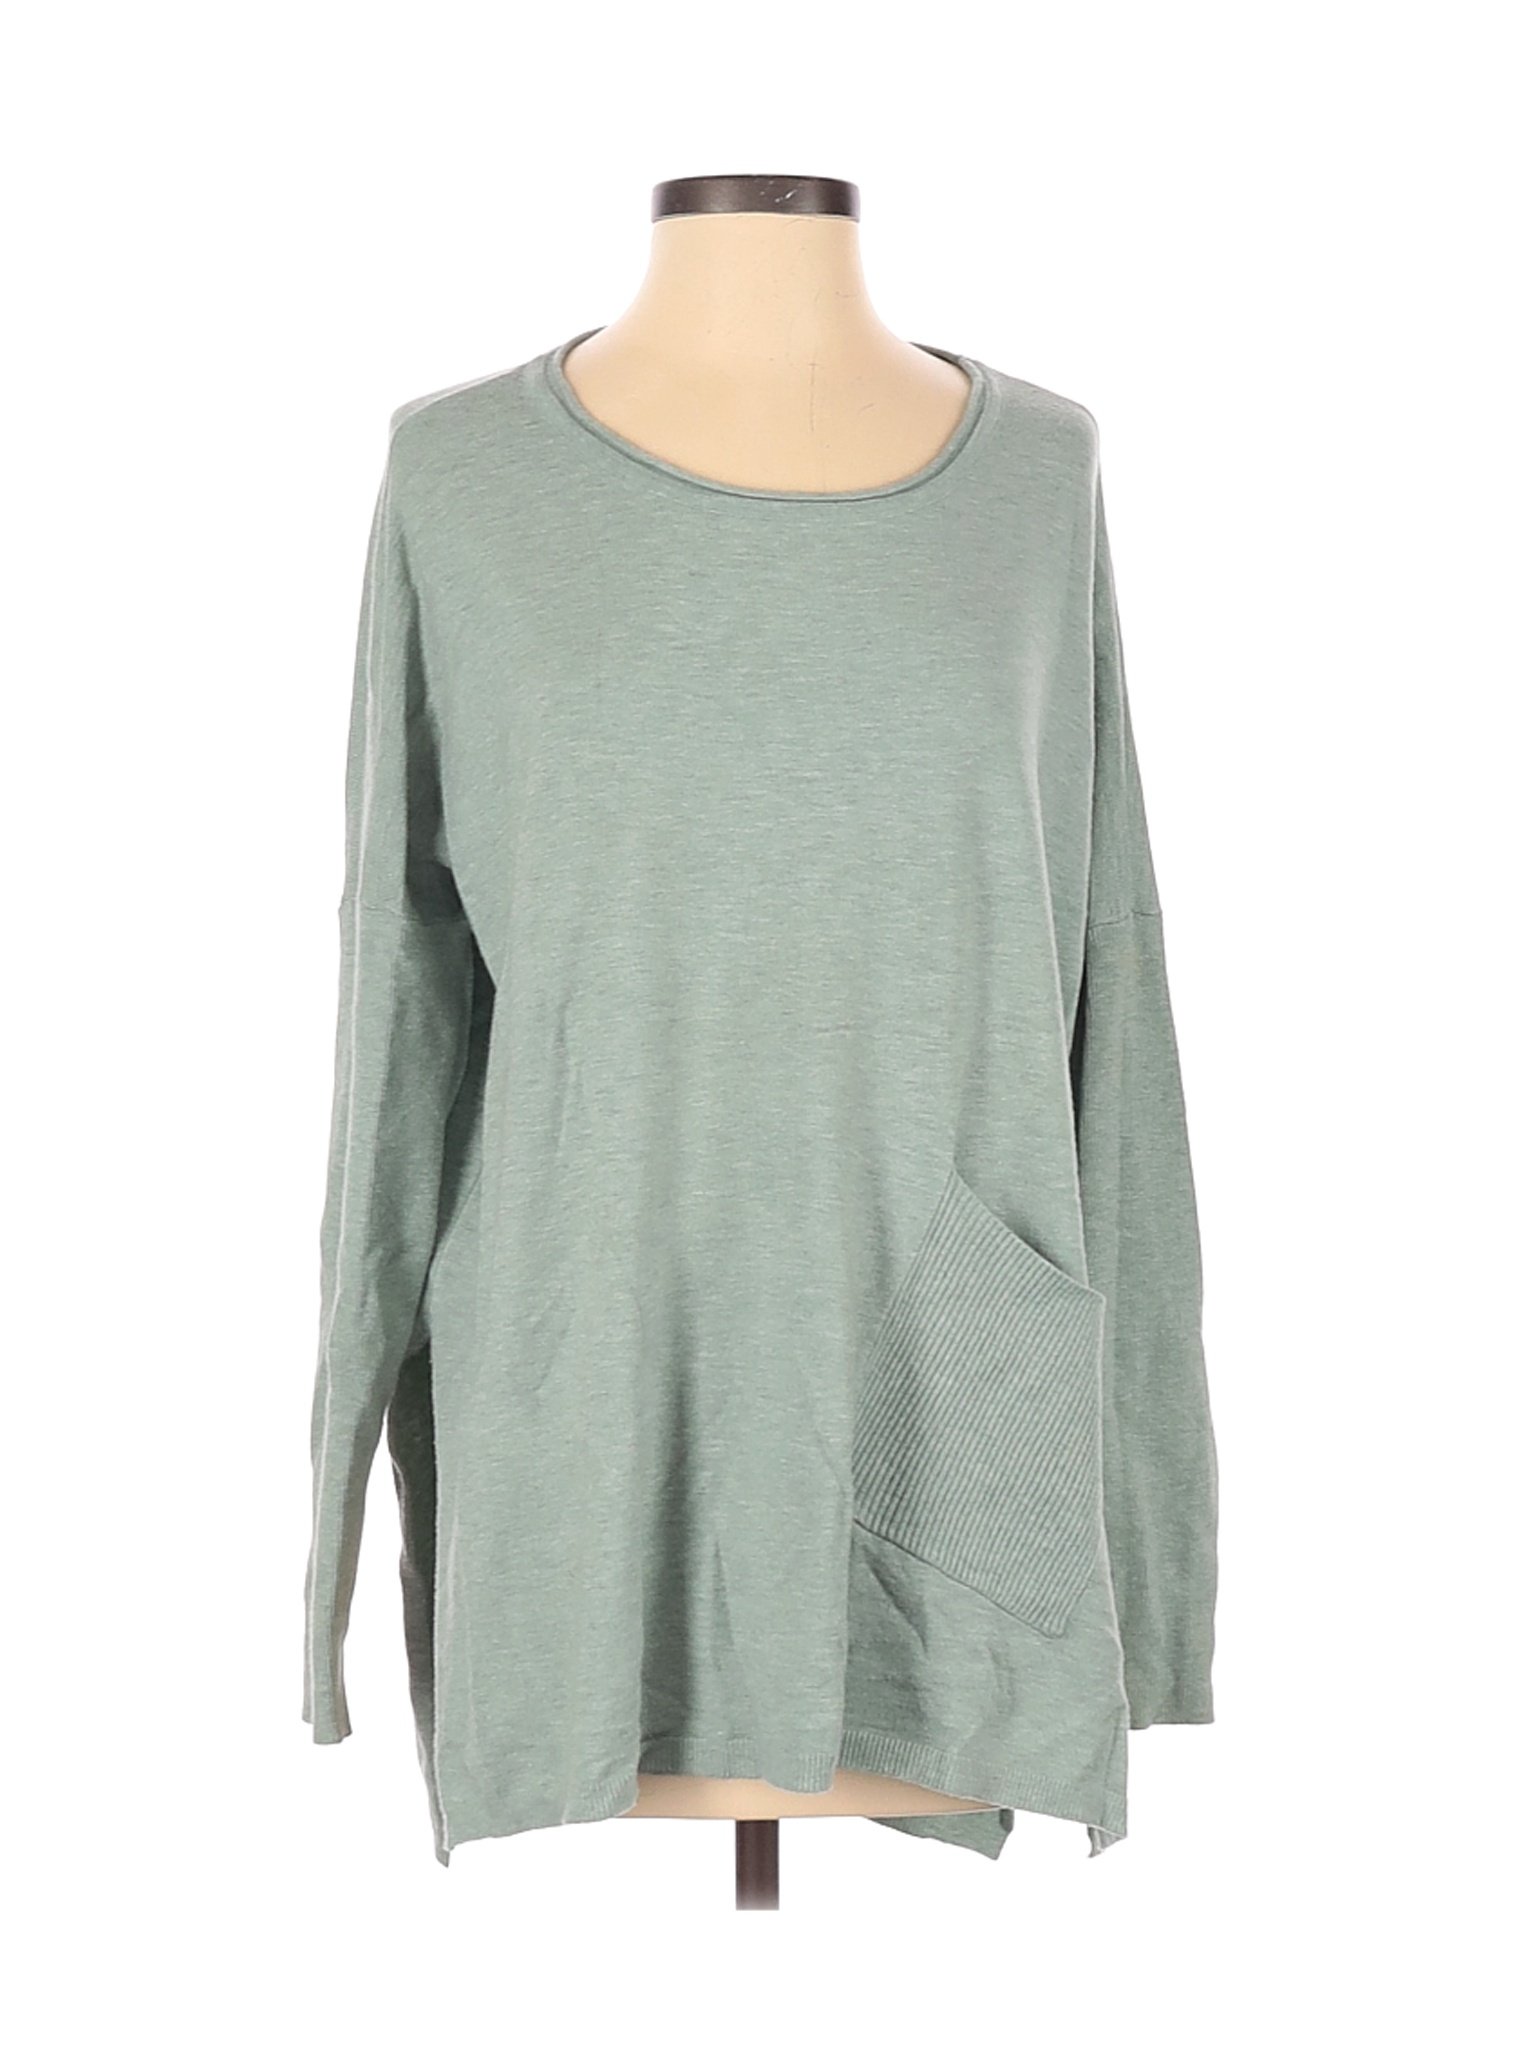 Altar'd State Women Green Pullover Sweater XS | eBay